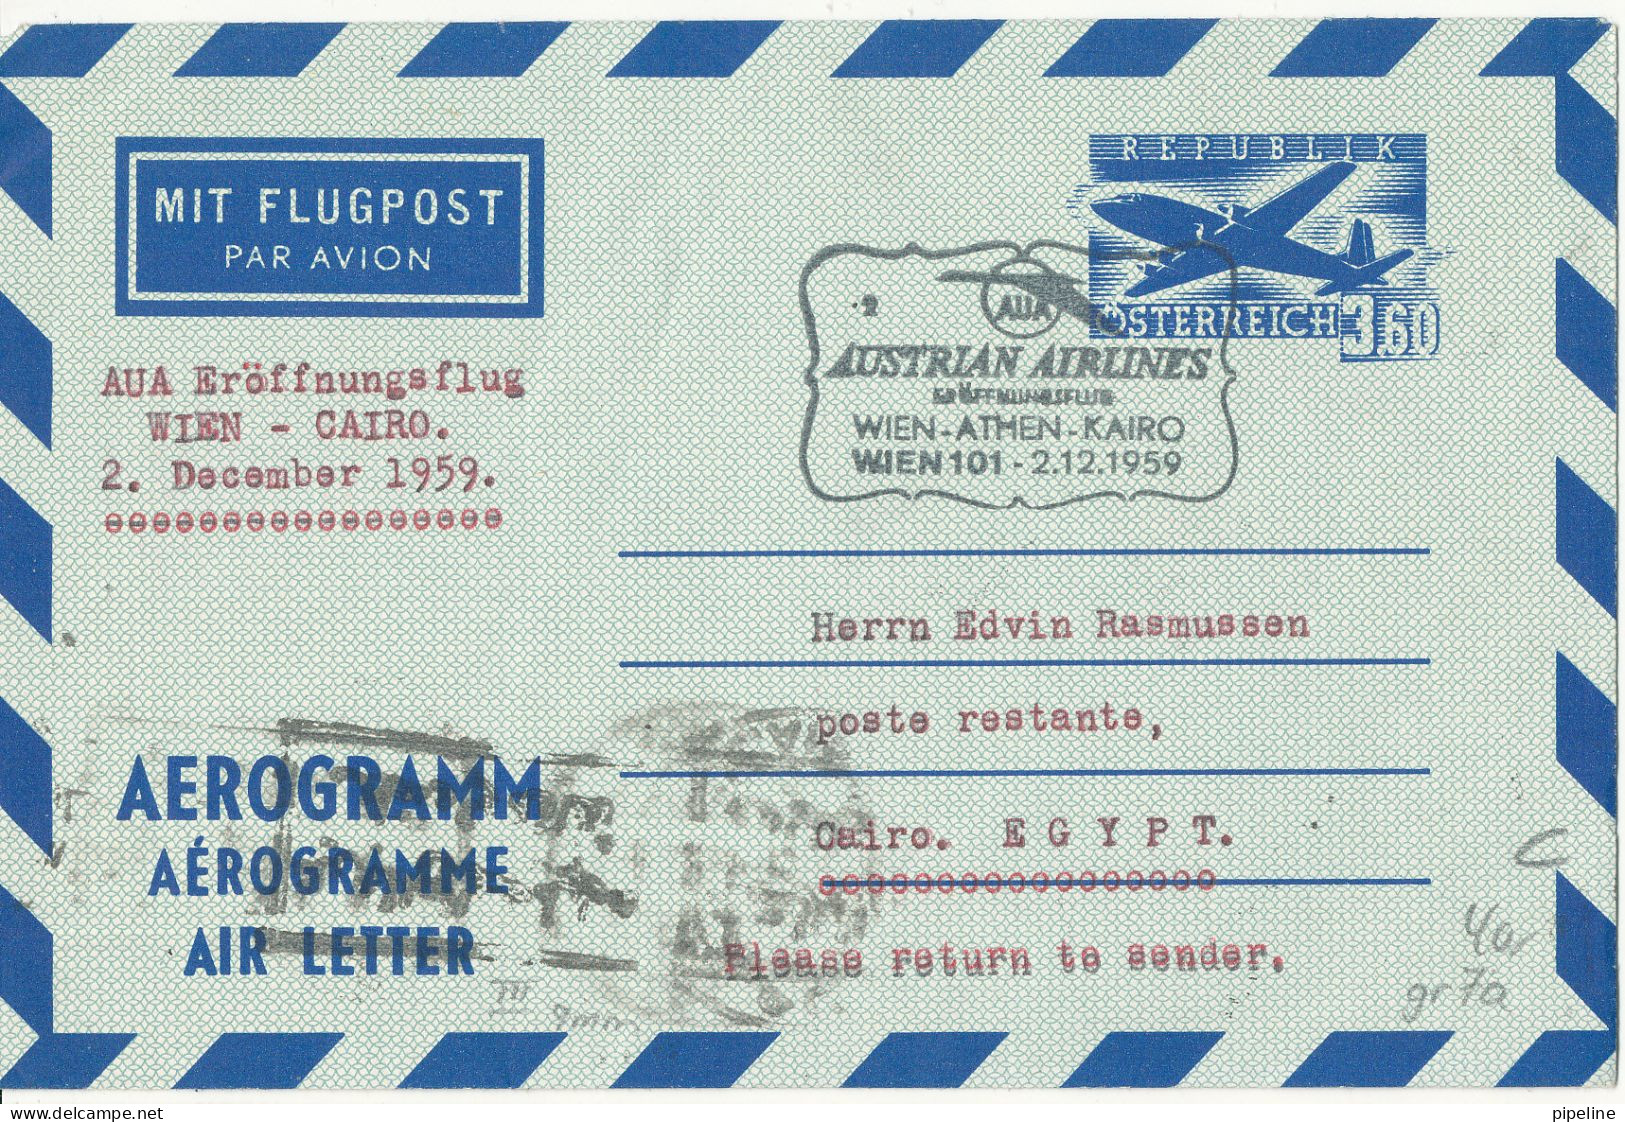 Austria Aerogramme First Flight Austrian Airlines Wien - Athen - Cairo -Wien 2-12-1959 - Primeros Vuelos